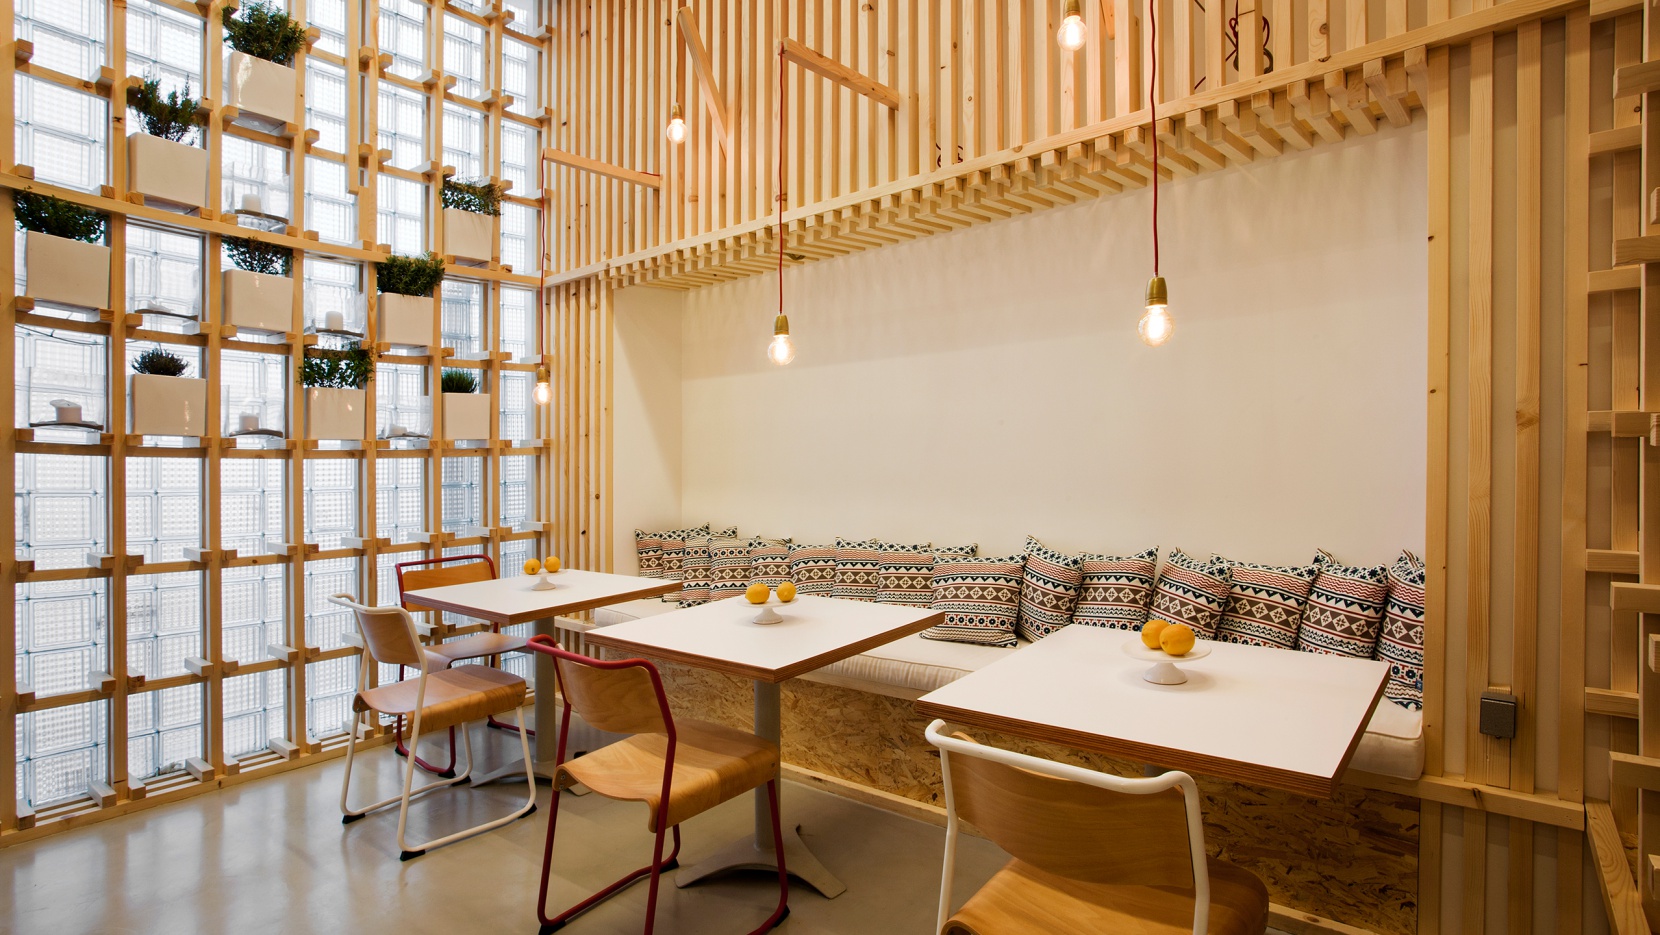 Cilantro Cafe, Egypt - Restaurant Interior Design on Love That Design